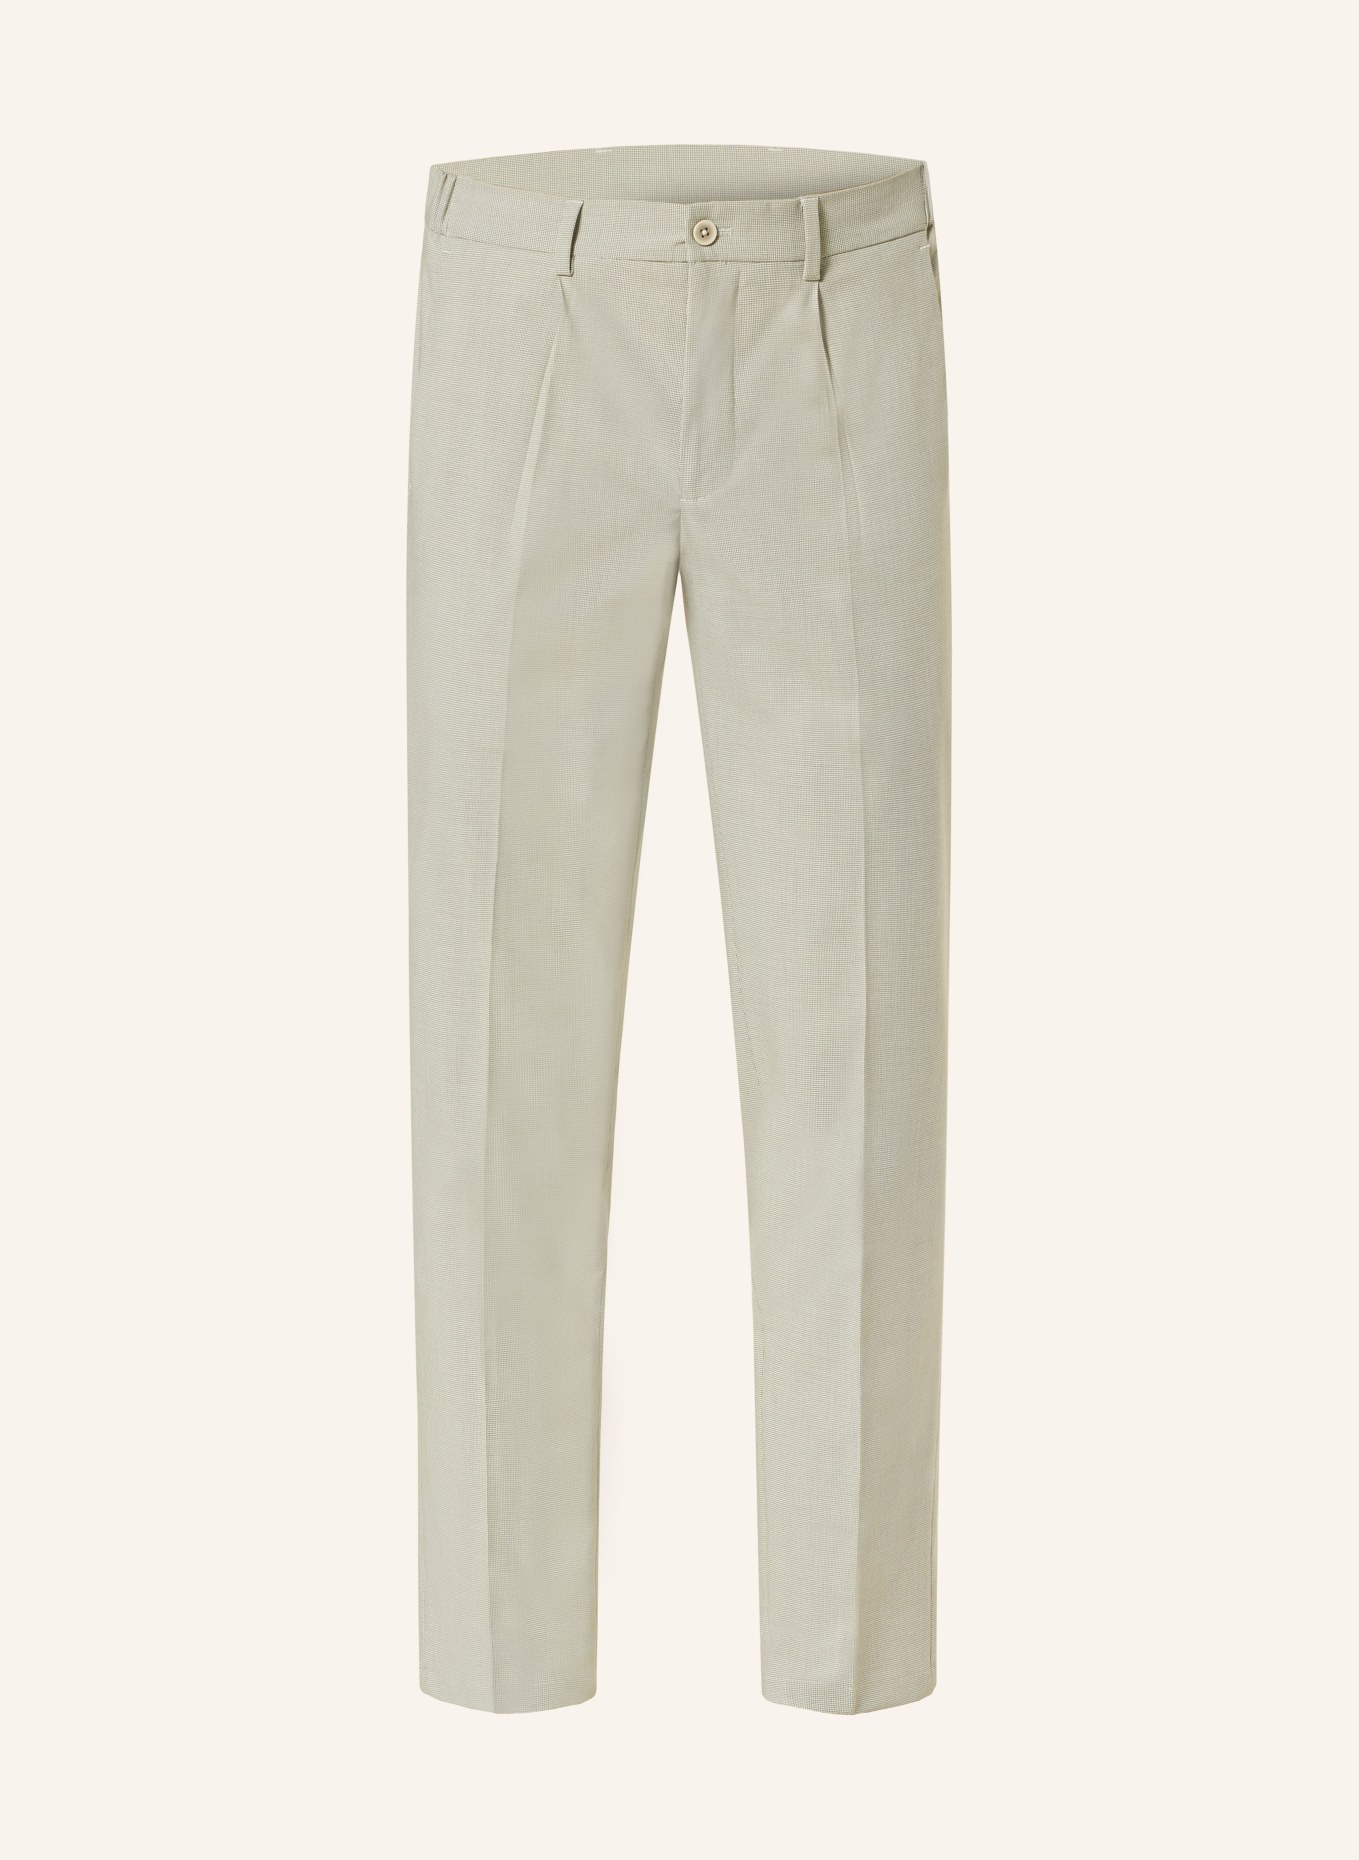 PAUL Anzughose Extra Slim Fit, Farbe: OLIV (Bild 1)